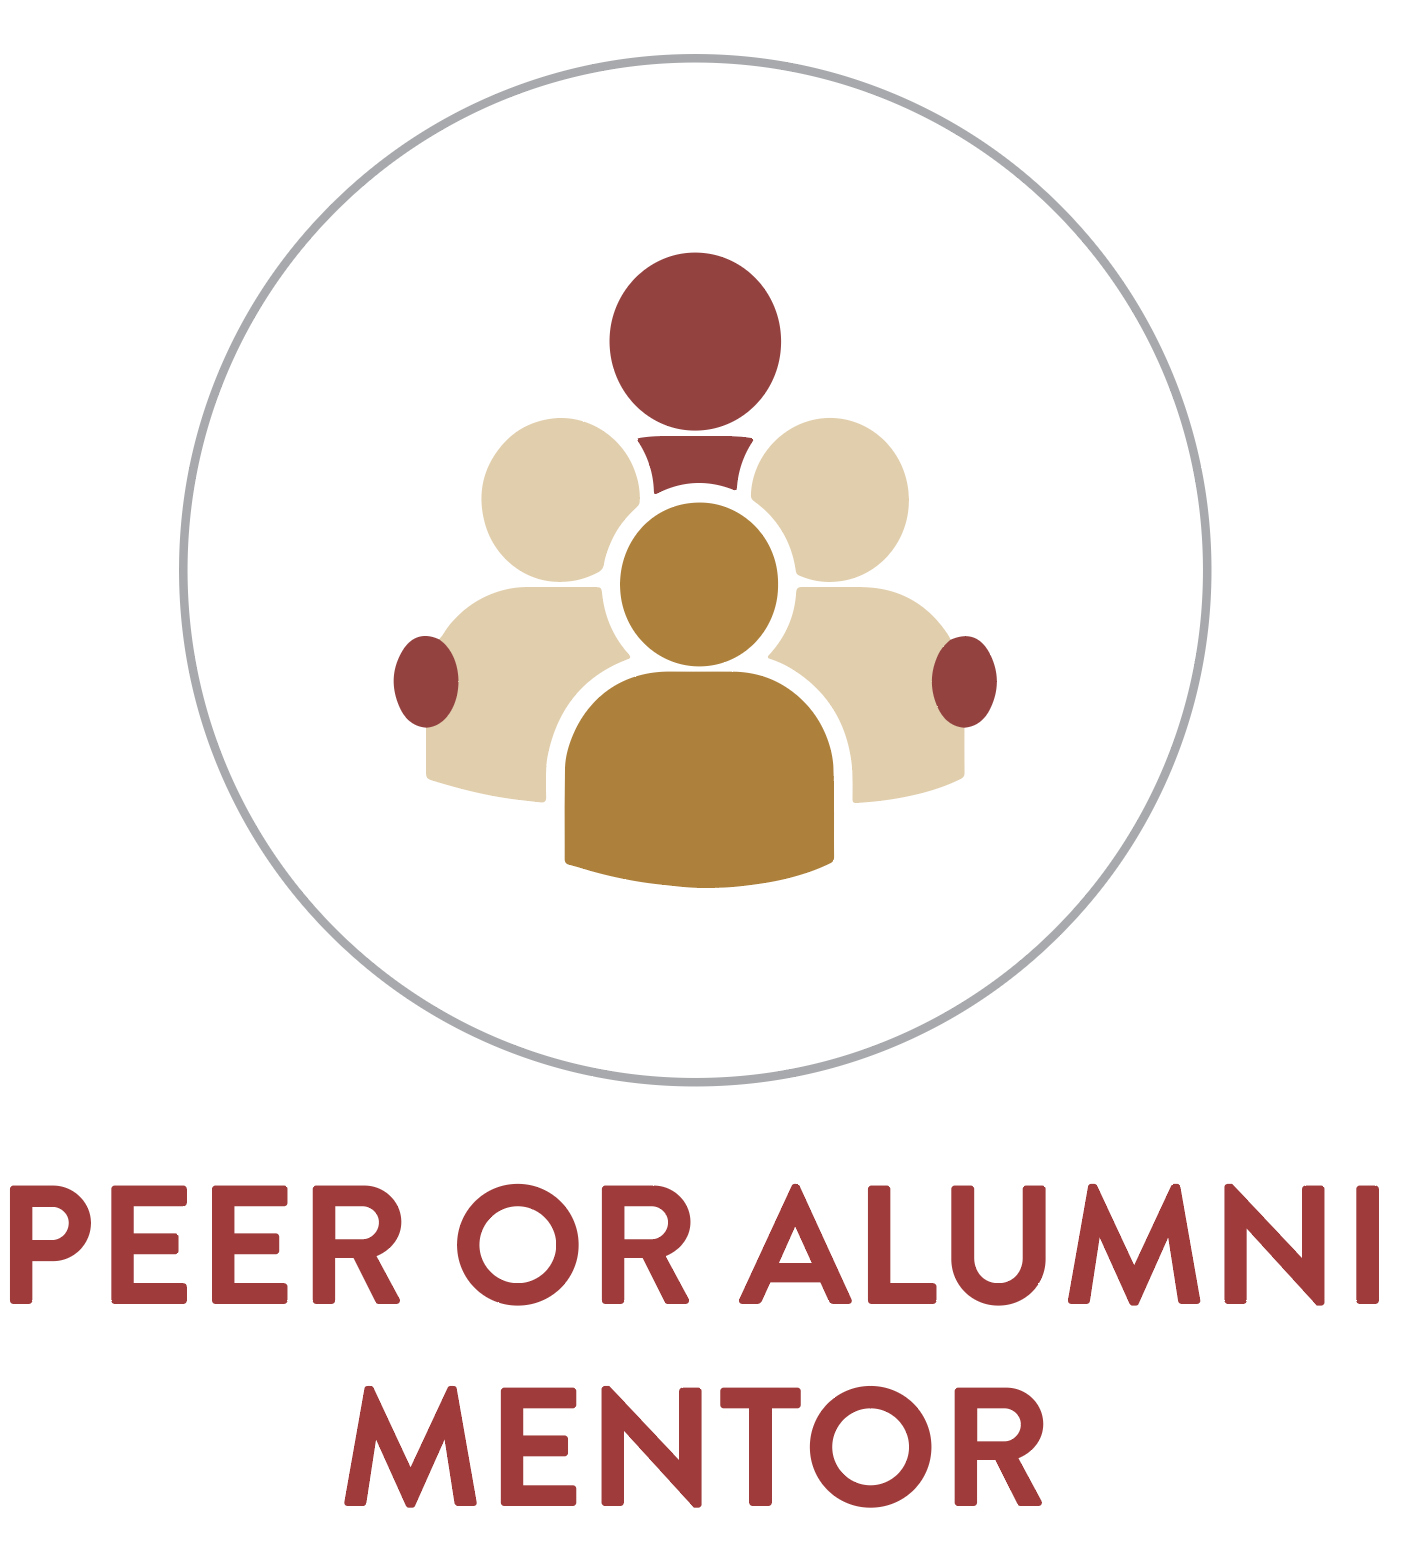 Alumni mentor